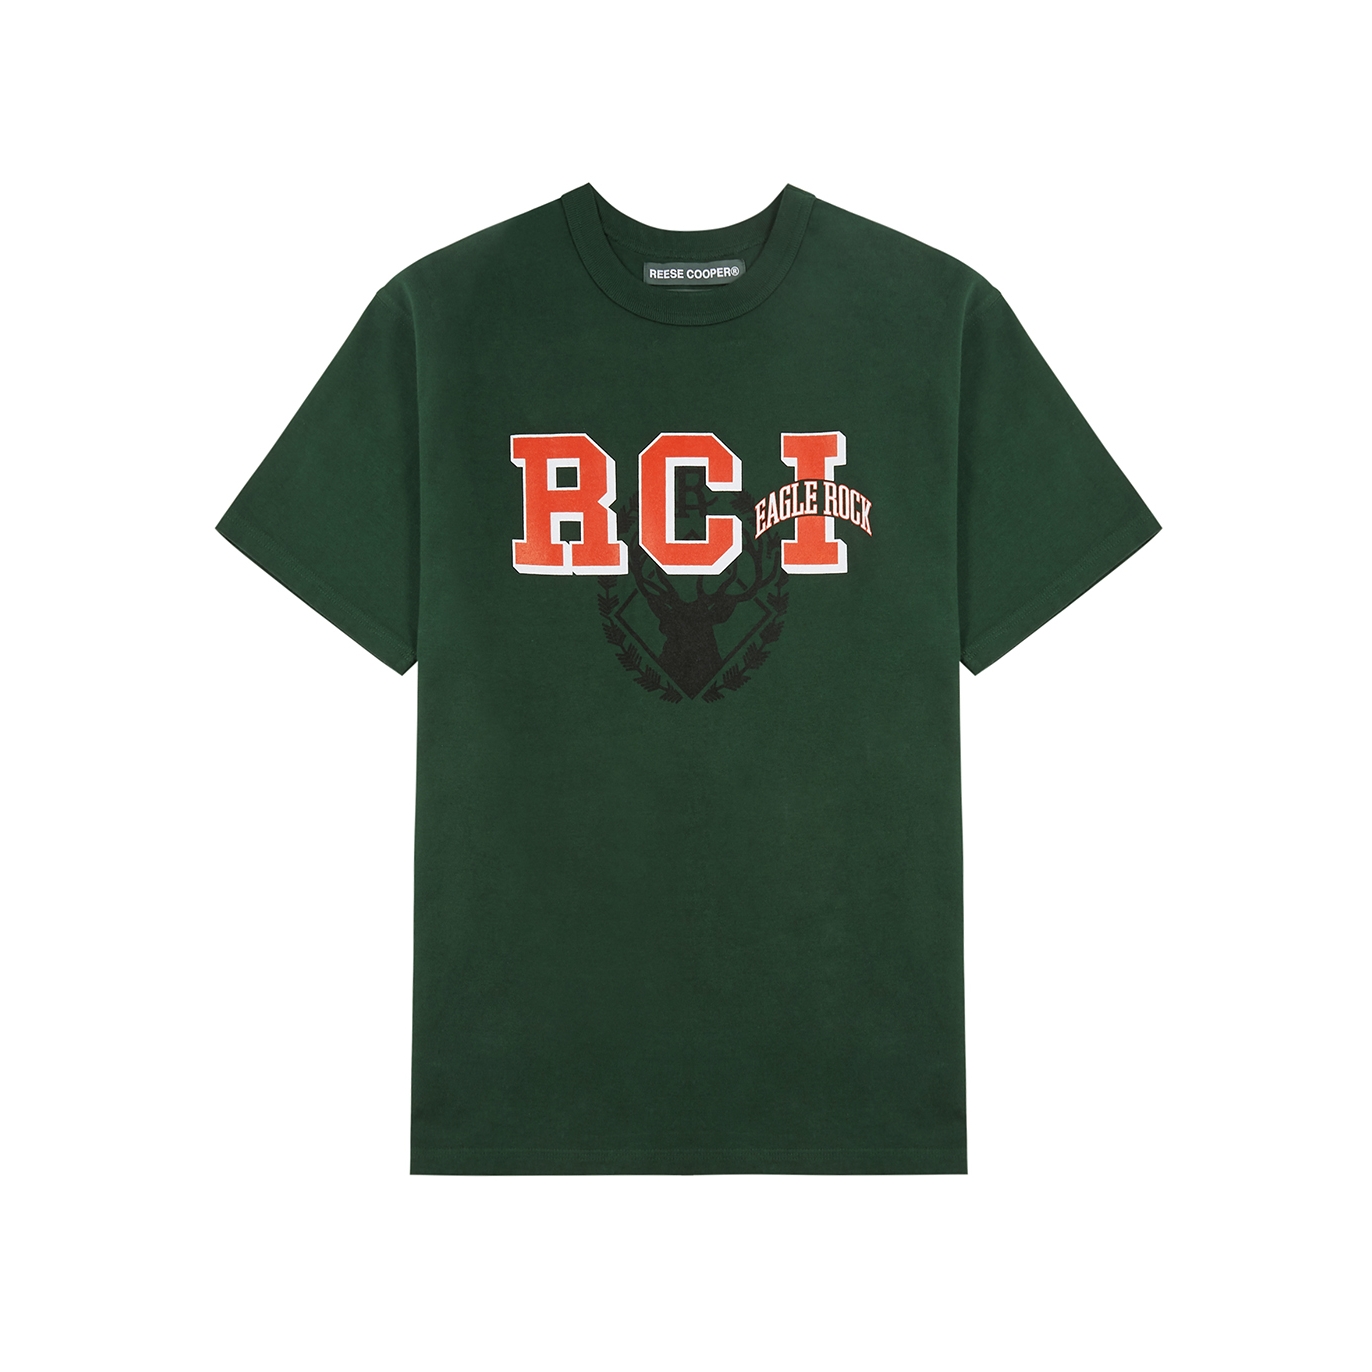 Reese Cooper Collegiate Green Logo Cotton T-shirt - L